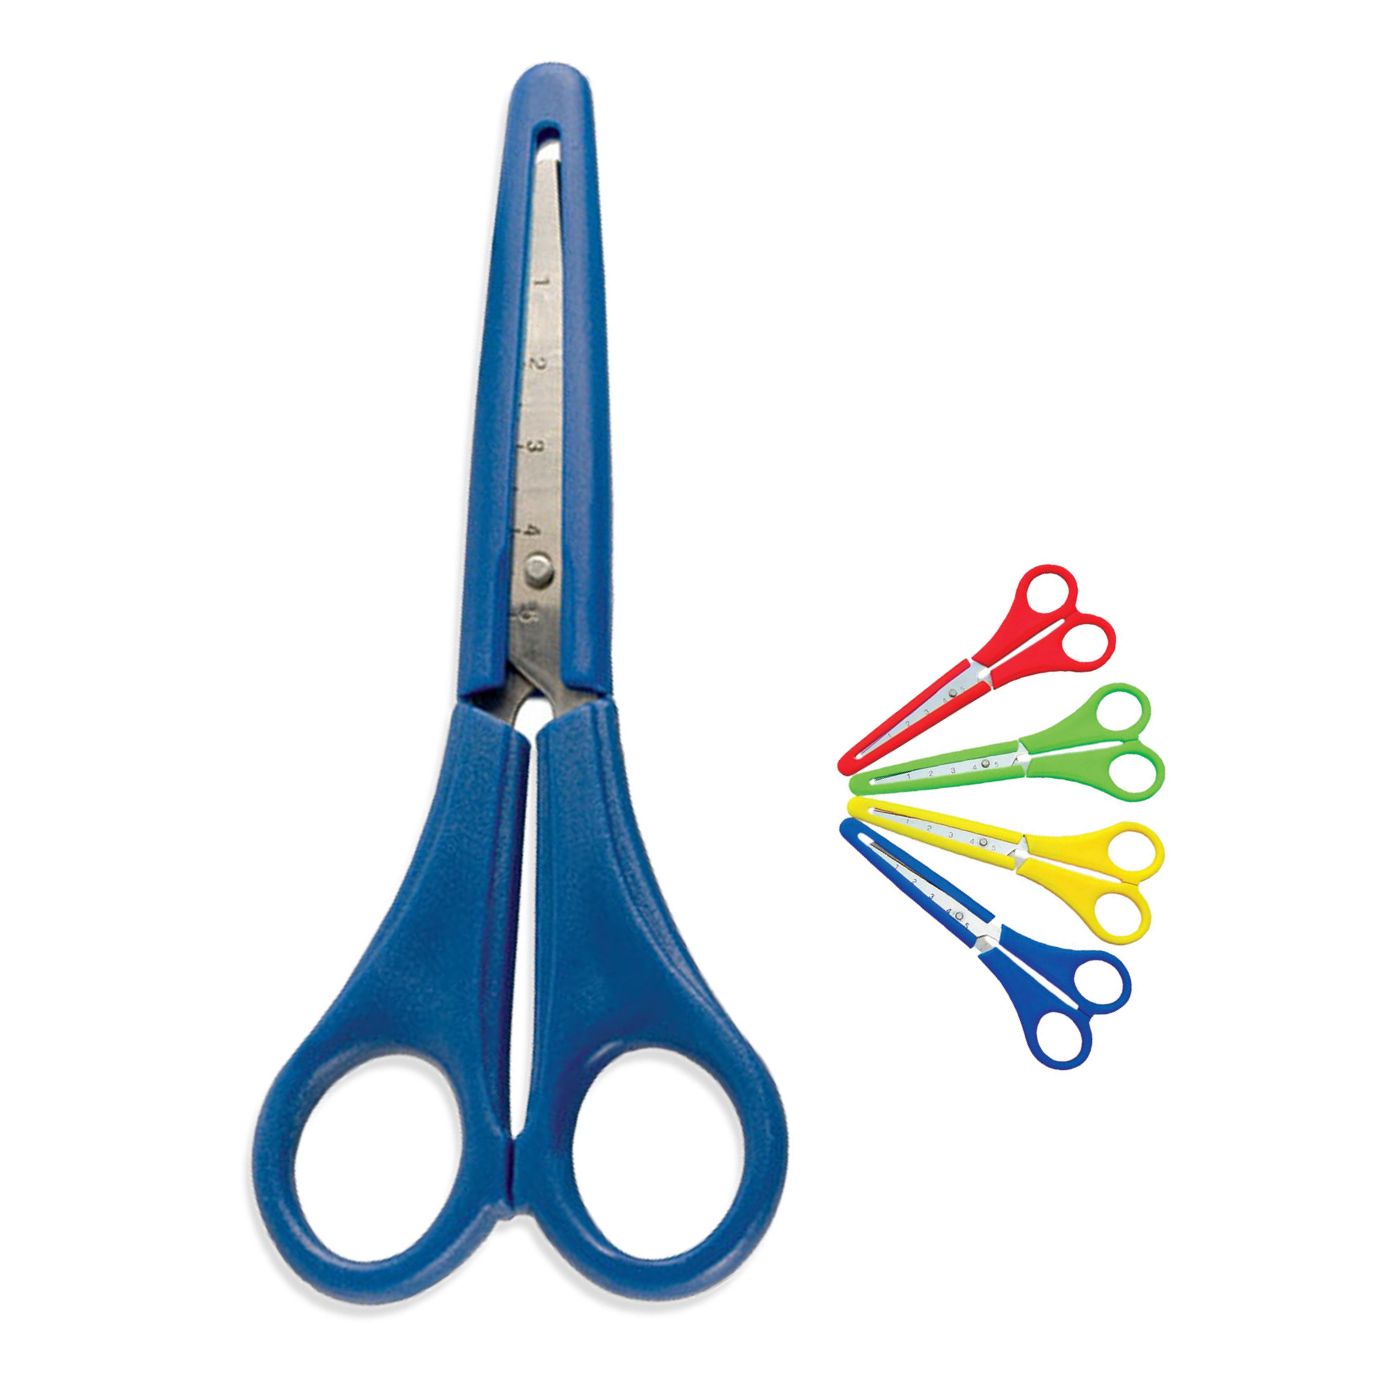 Milan School Scissors with Plastic Cover 147mm